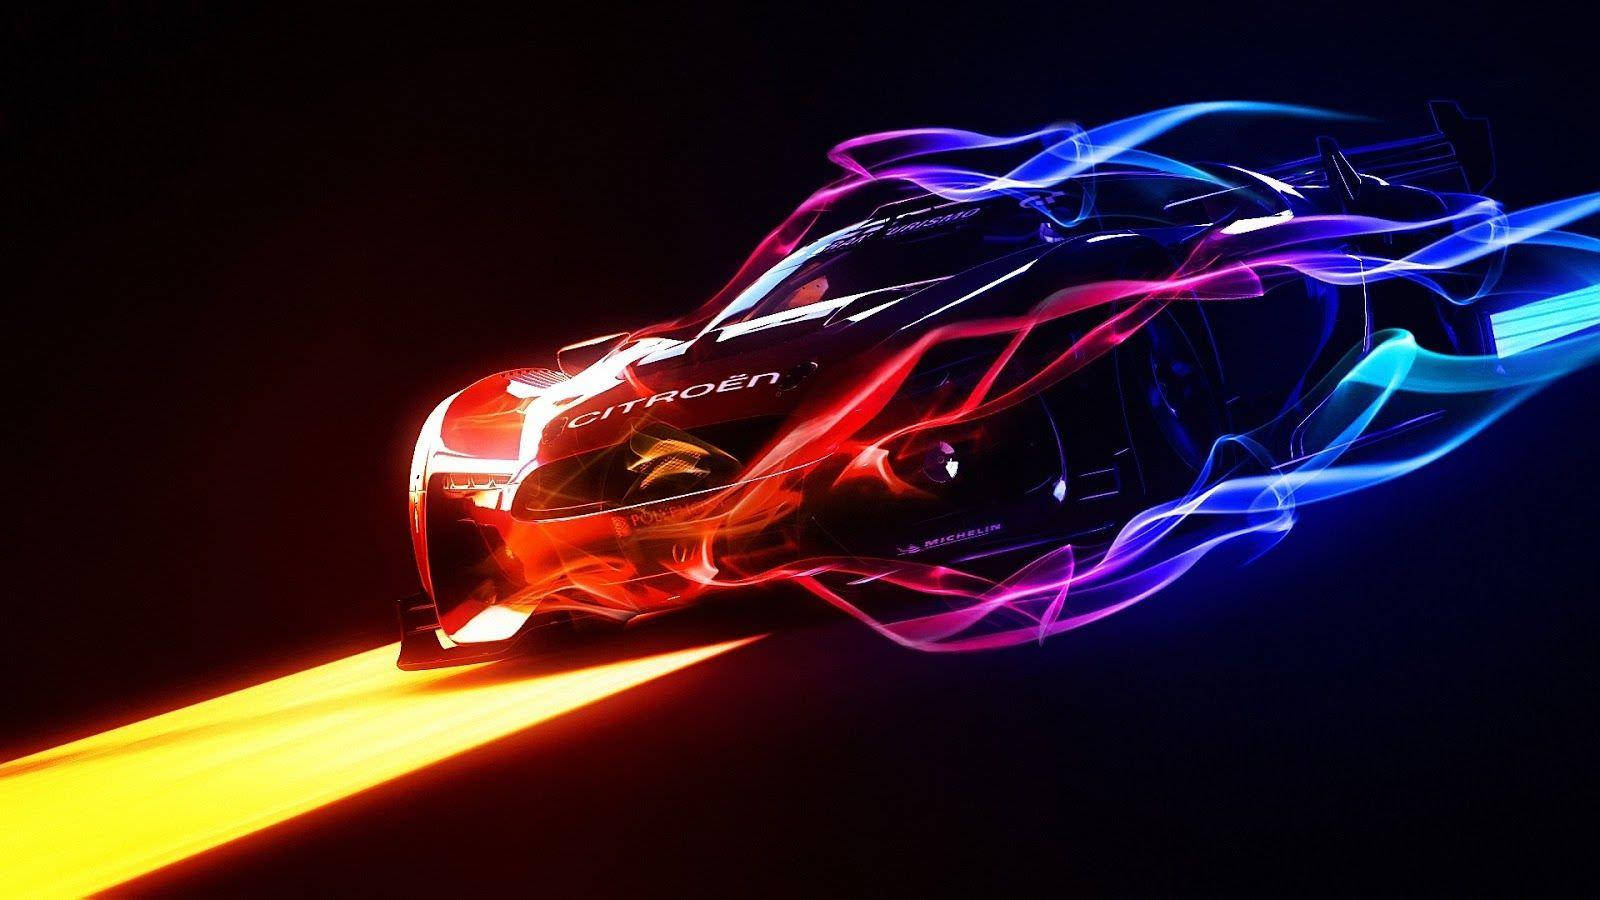 Futuristic Neon Fire Car On A Dynamic Desktop Background